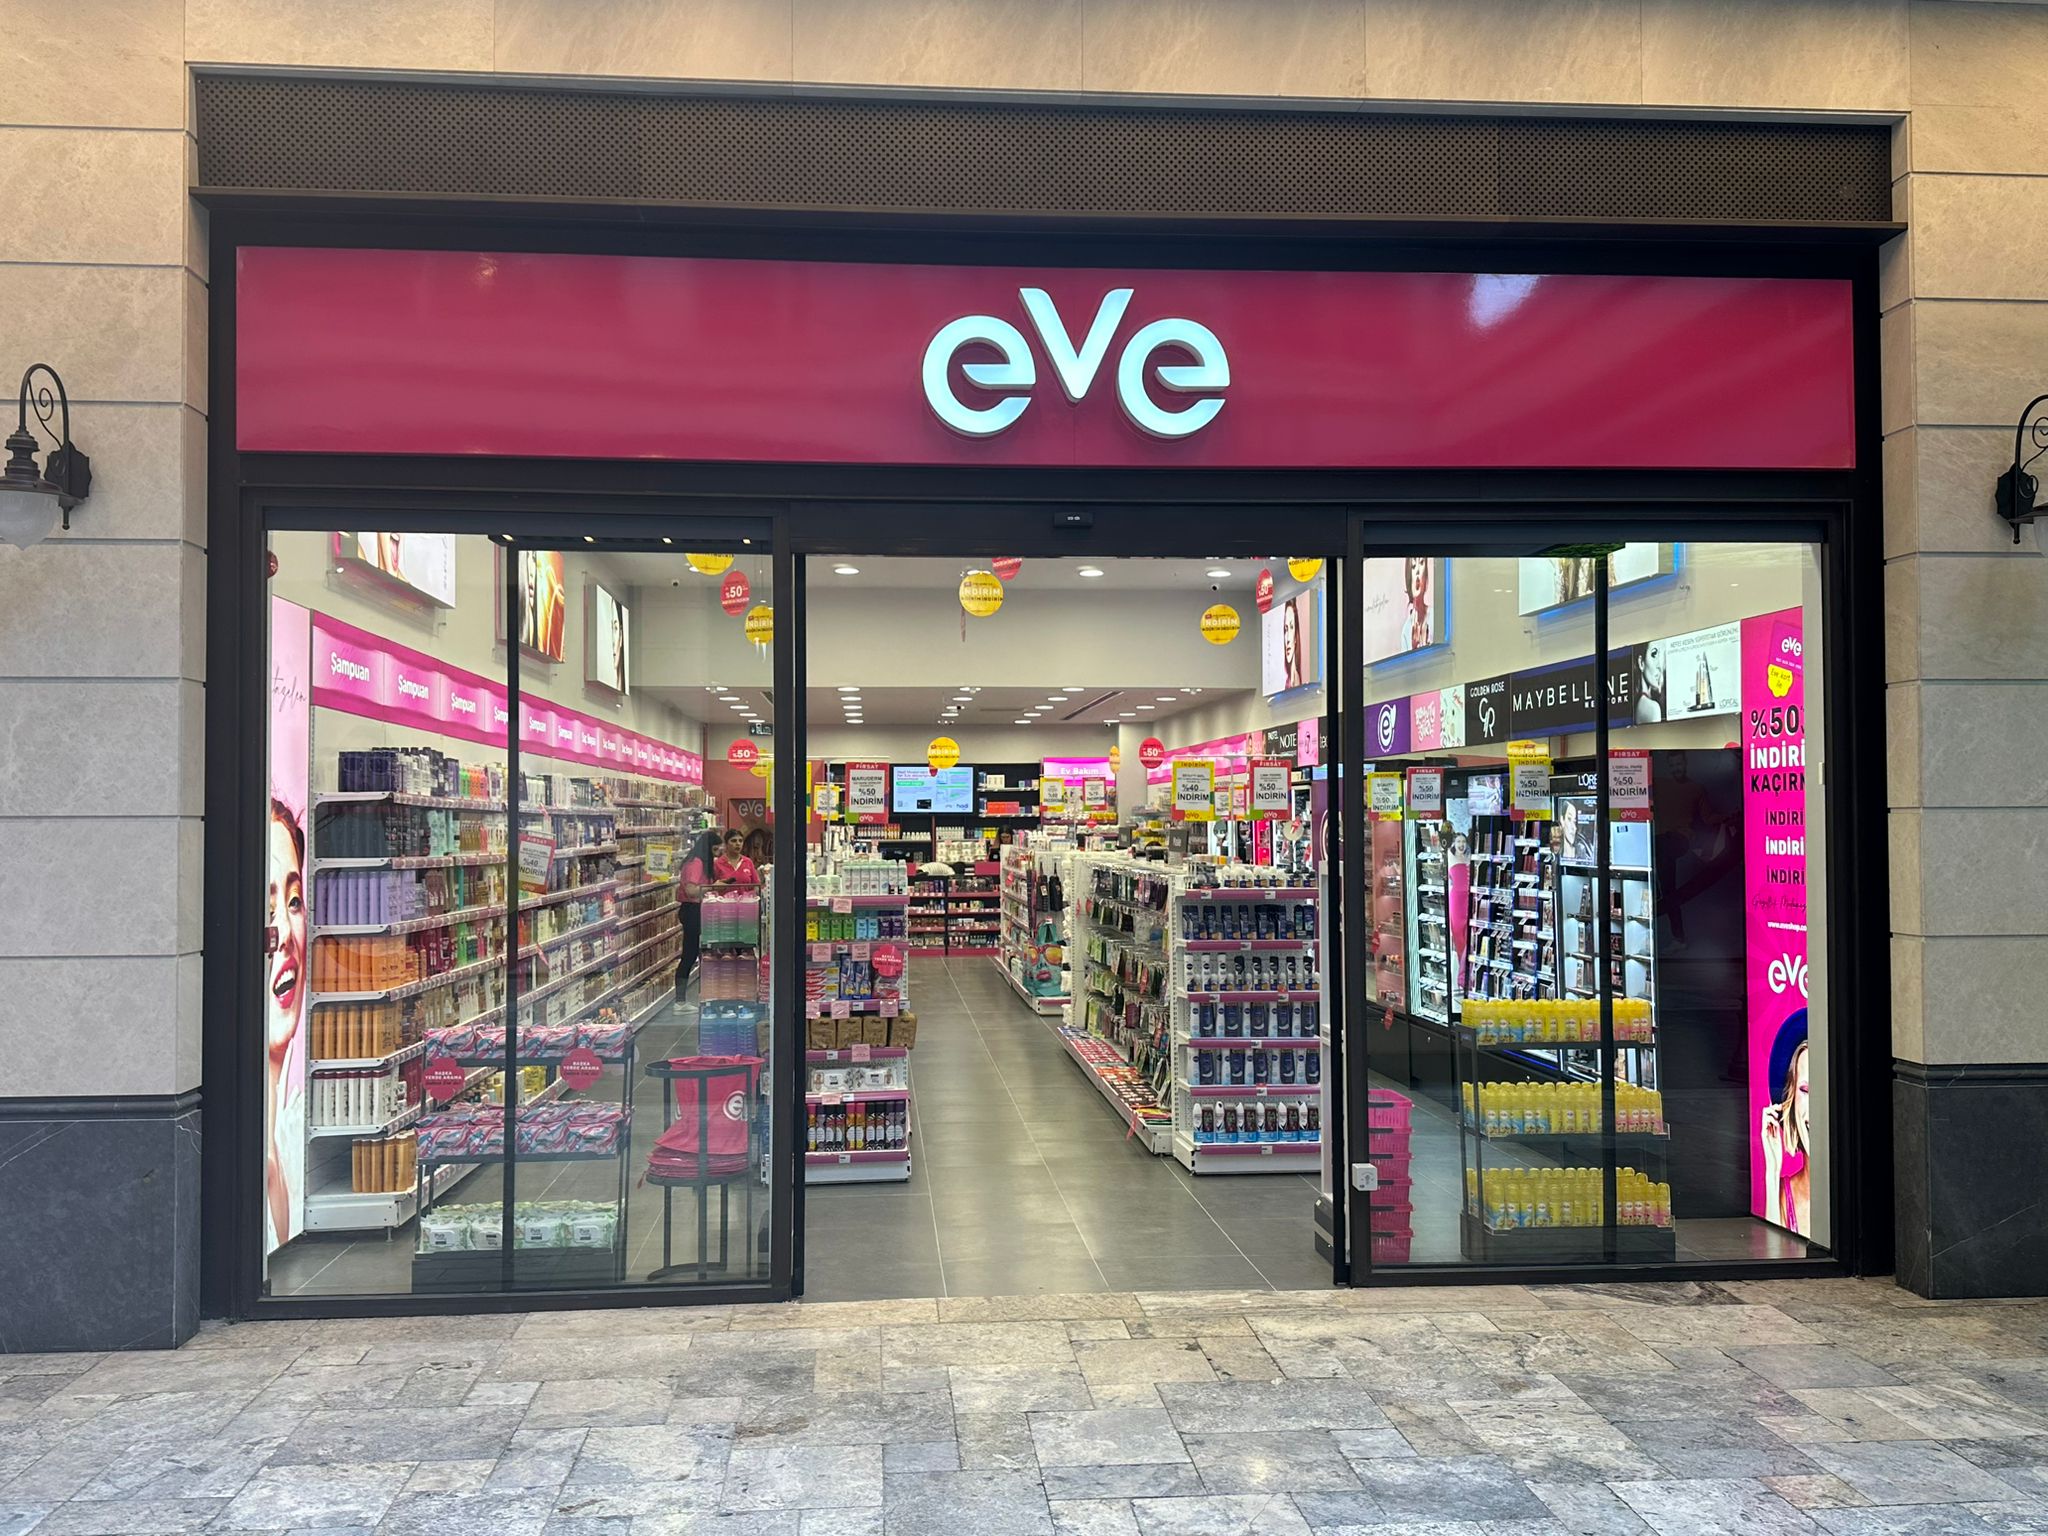 Eve Shop is opened at Piyalepaşa Çarşı Strip Mall.